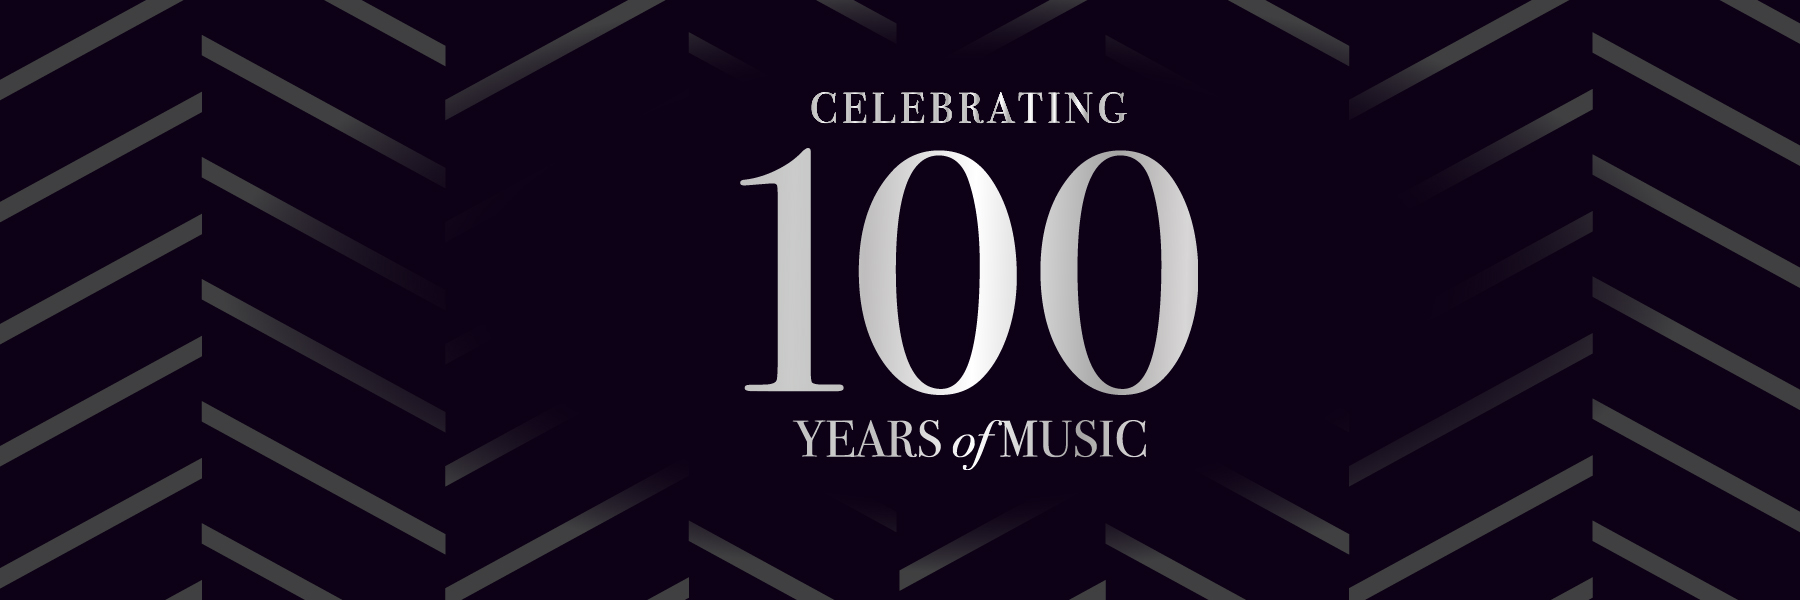 Black background with platinum chevron patterns. Celebrating 100 years of Music.